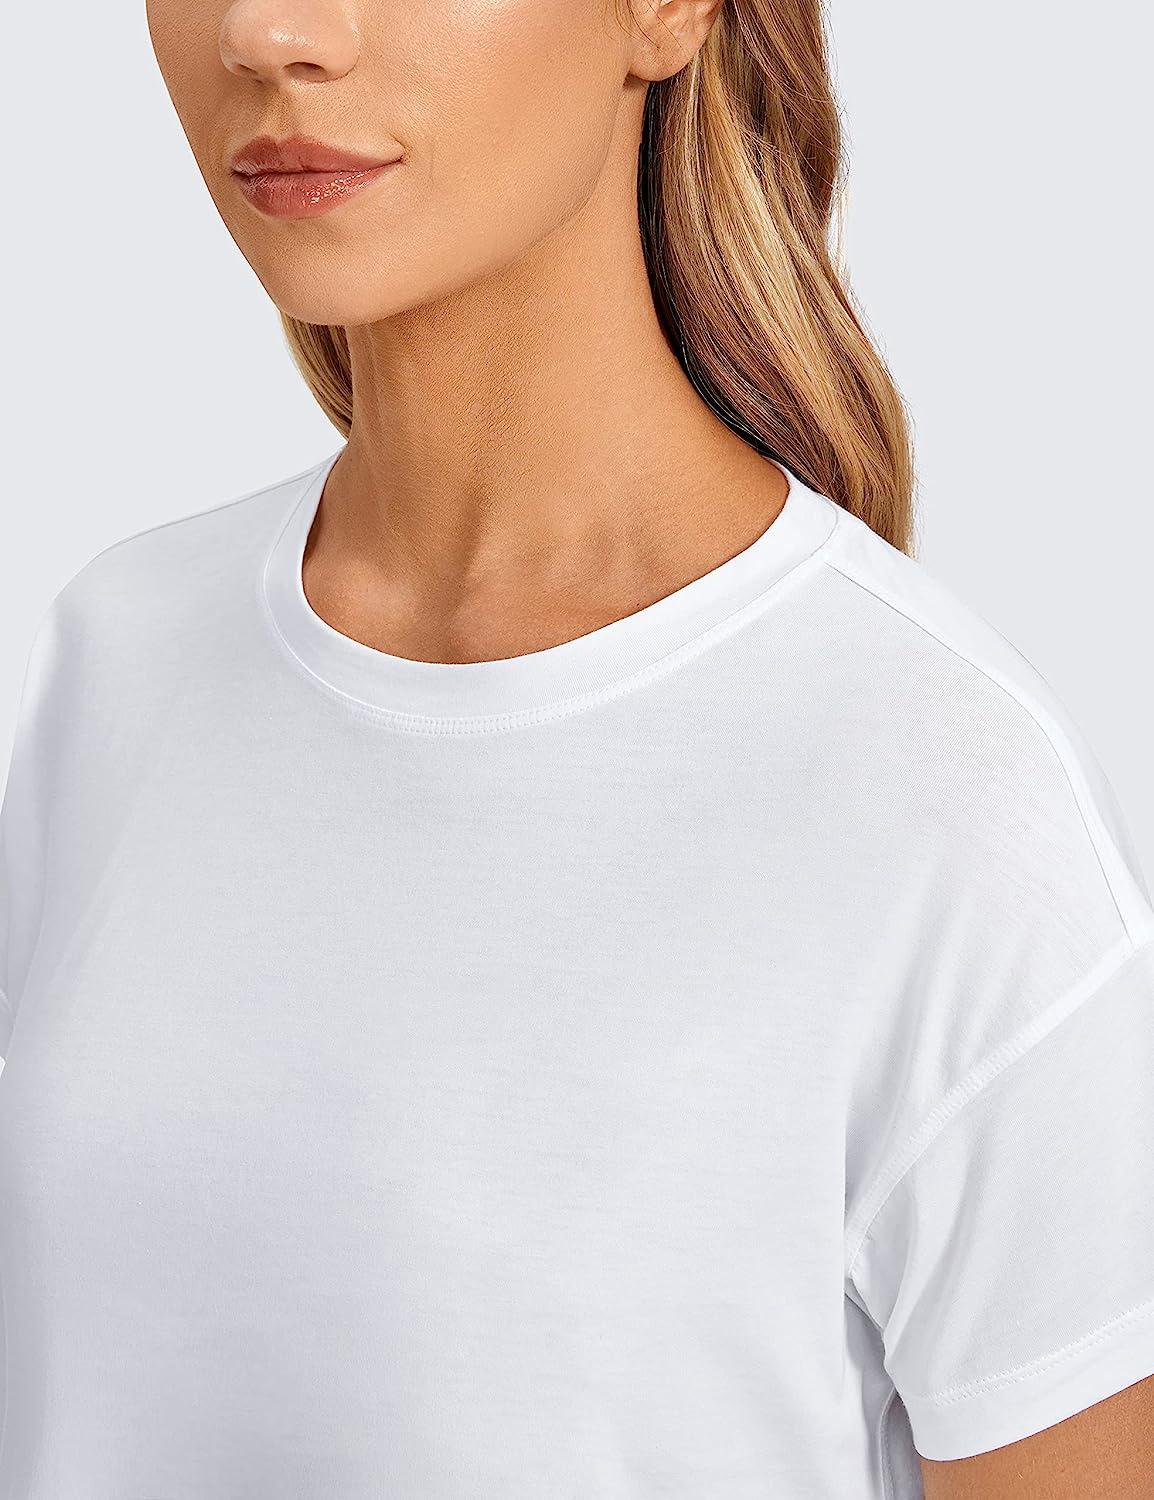 CRZ YOGA Pima Cotton Long Sleeve Shirts for Women Workout Crop